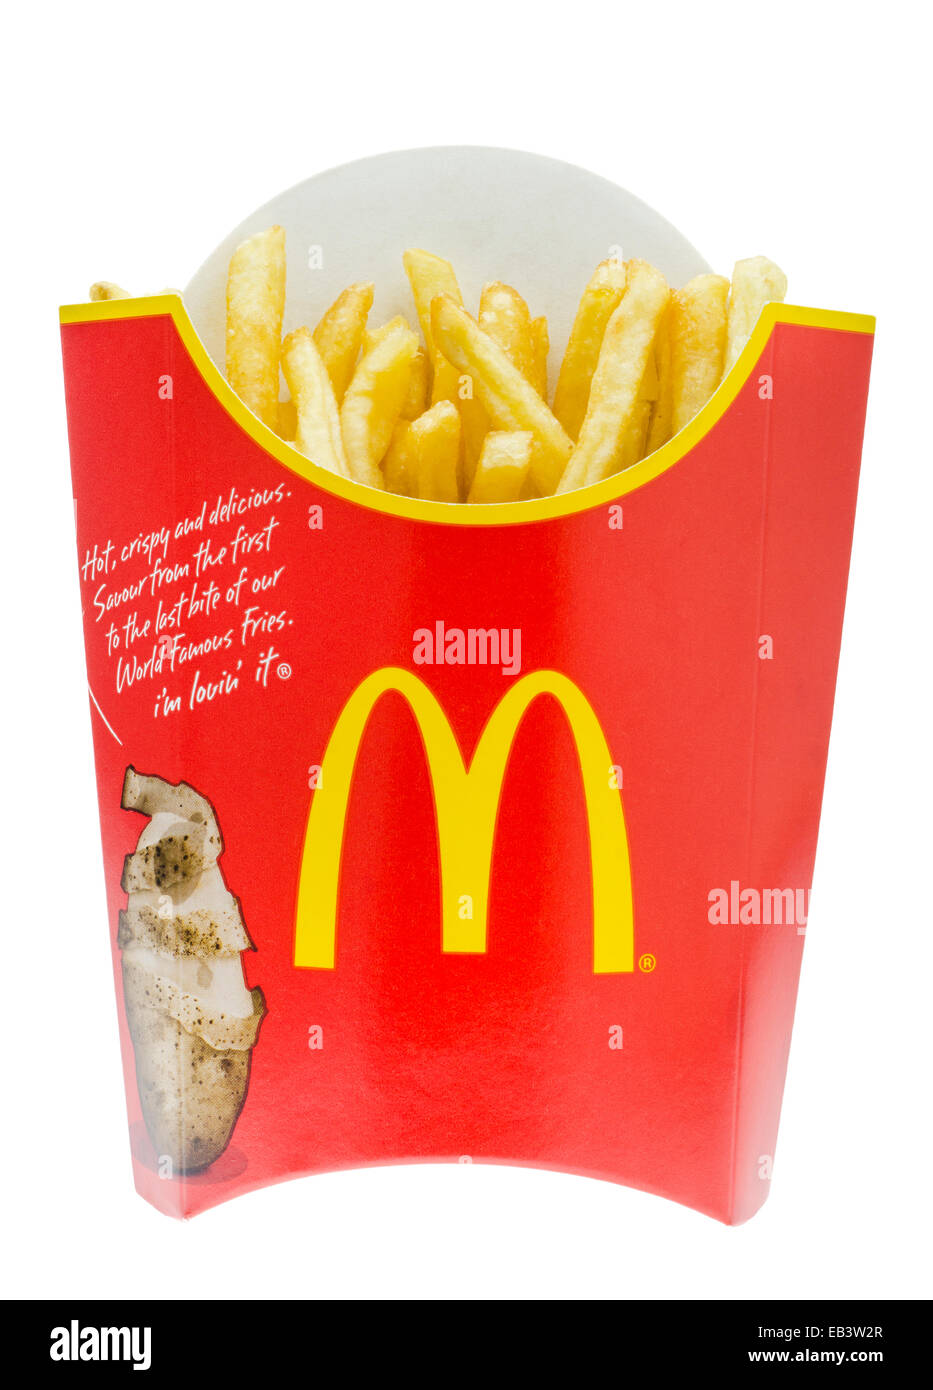 McDonald's patatine fritte Foto Stock